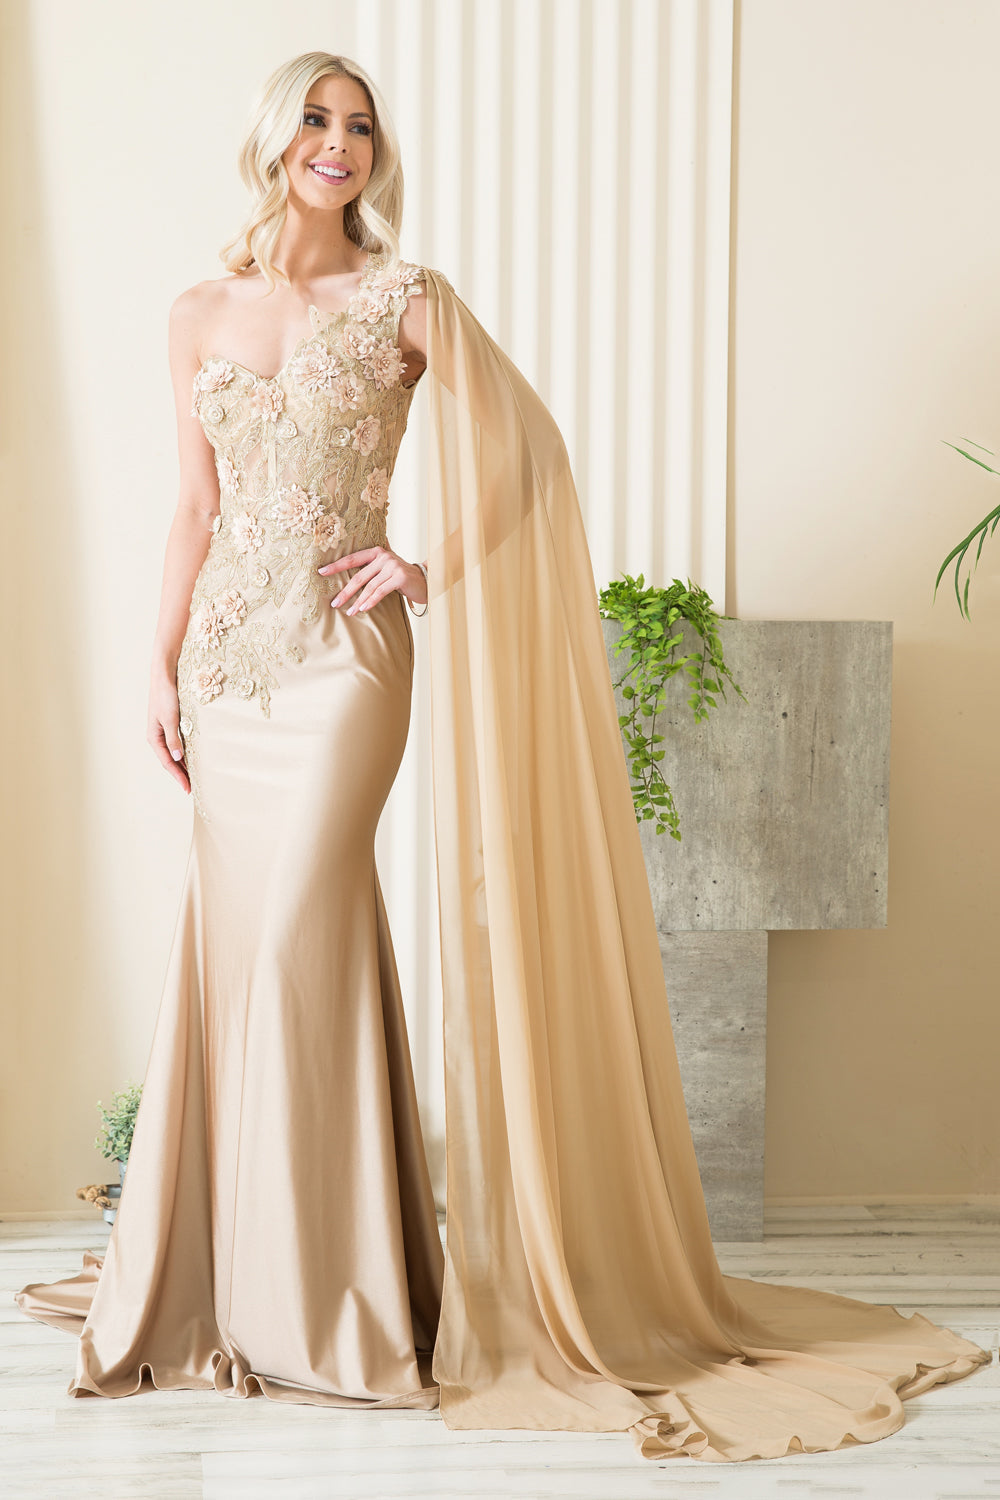 Strap One Shoulder 3D Floral Applique Mermaid Long Evening & Prom Dress AC388-Prom Dress-smcfashion.com